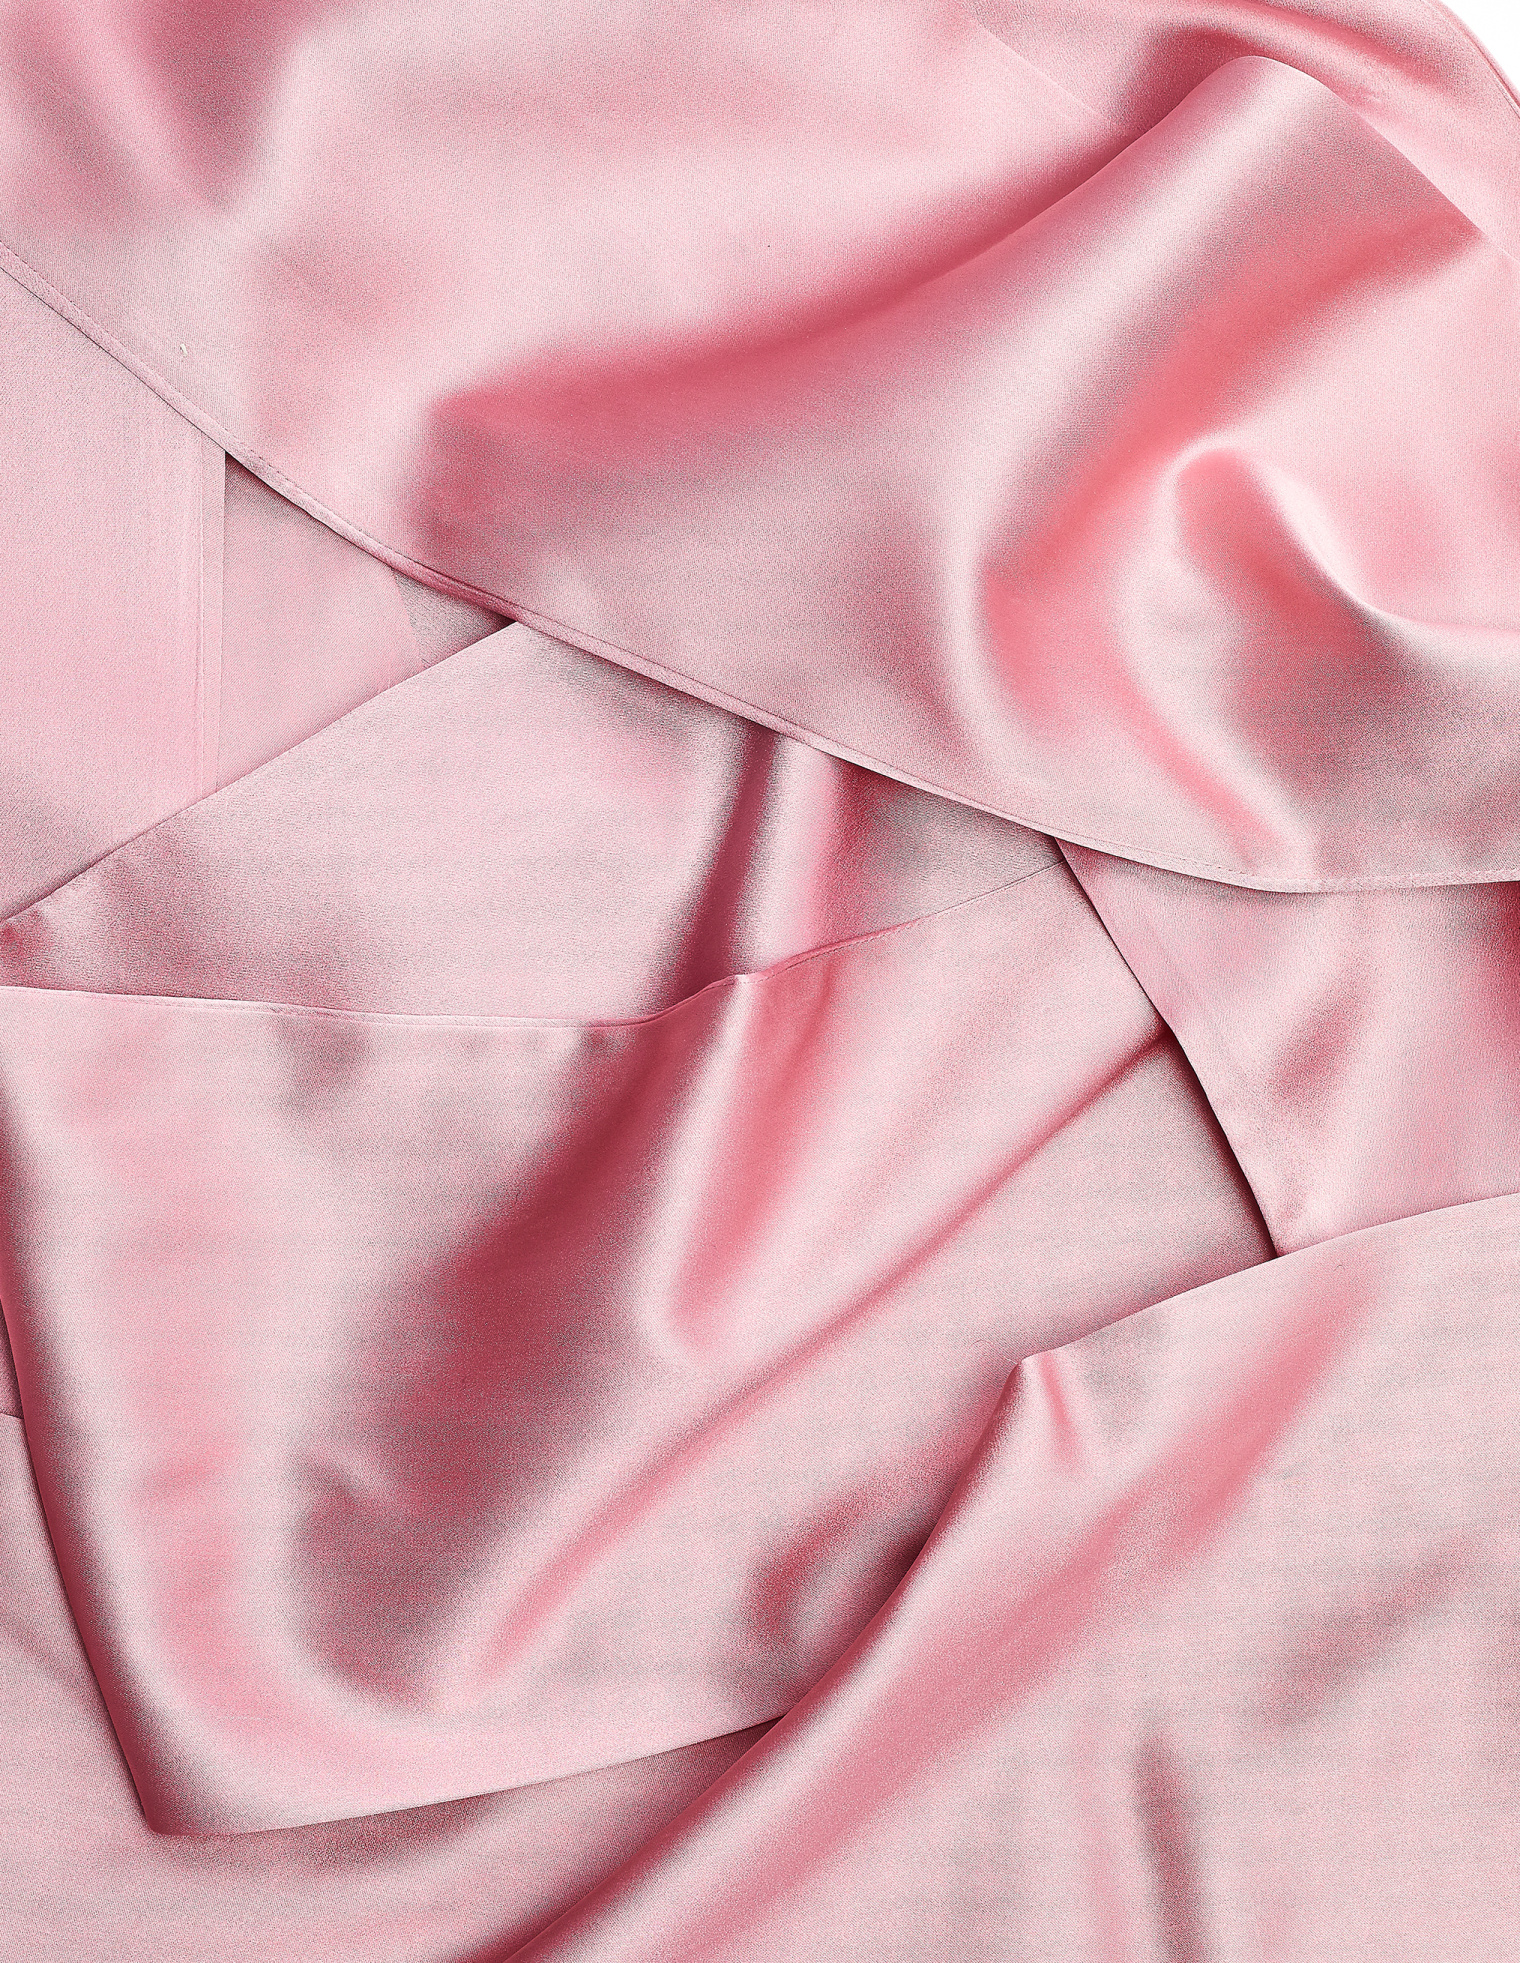 Undercover Розовый шелковый шарф